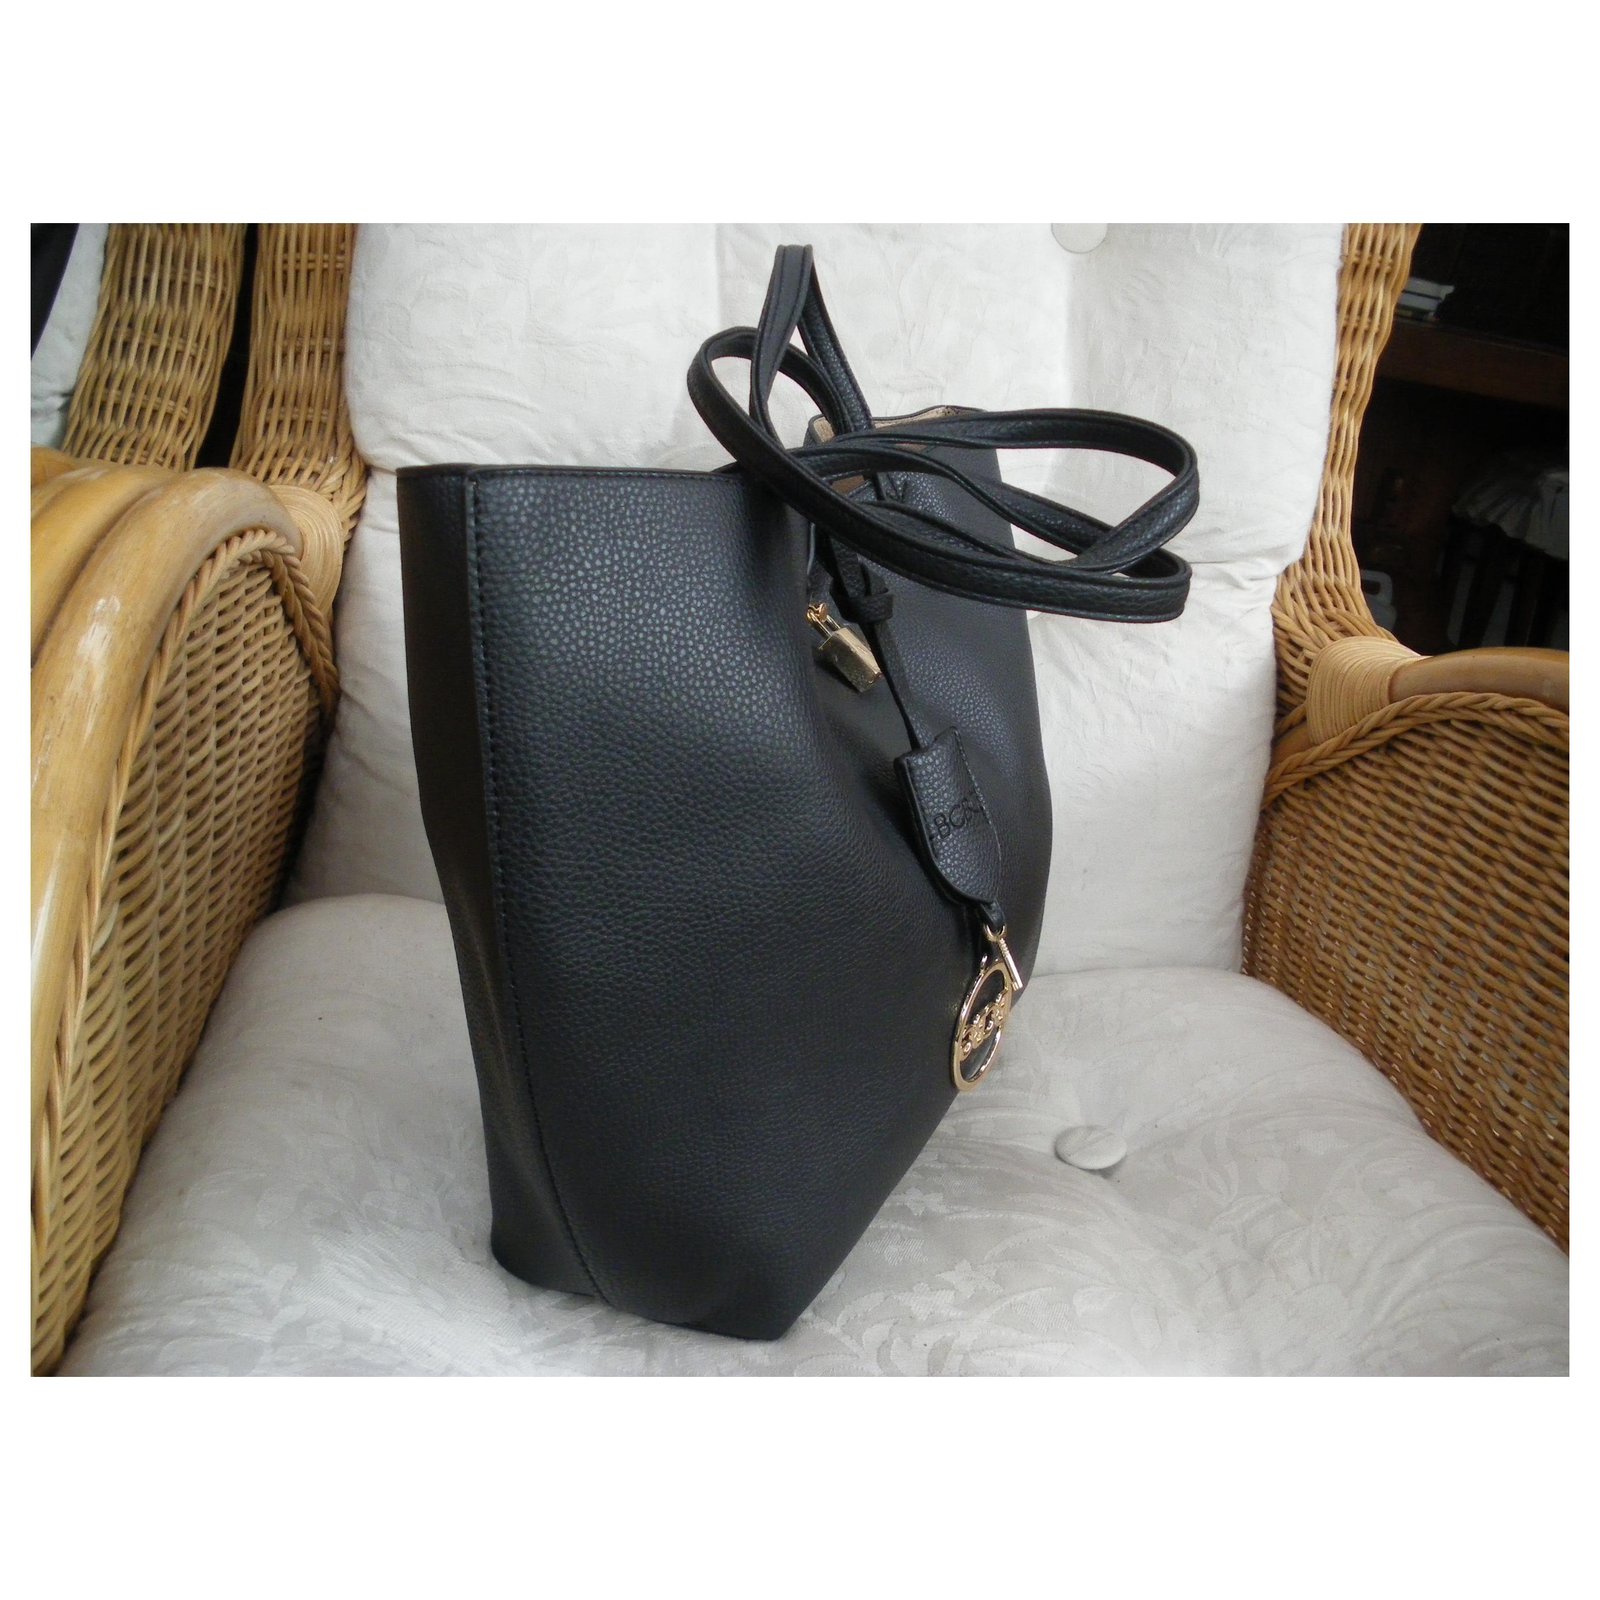 BCBGeneration North South Black Patent Carry All Tote BCBG Handbag NEW $128  | eBay